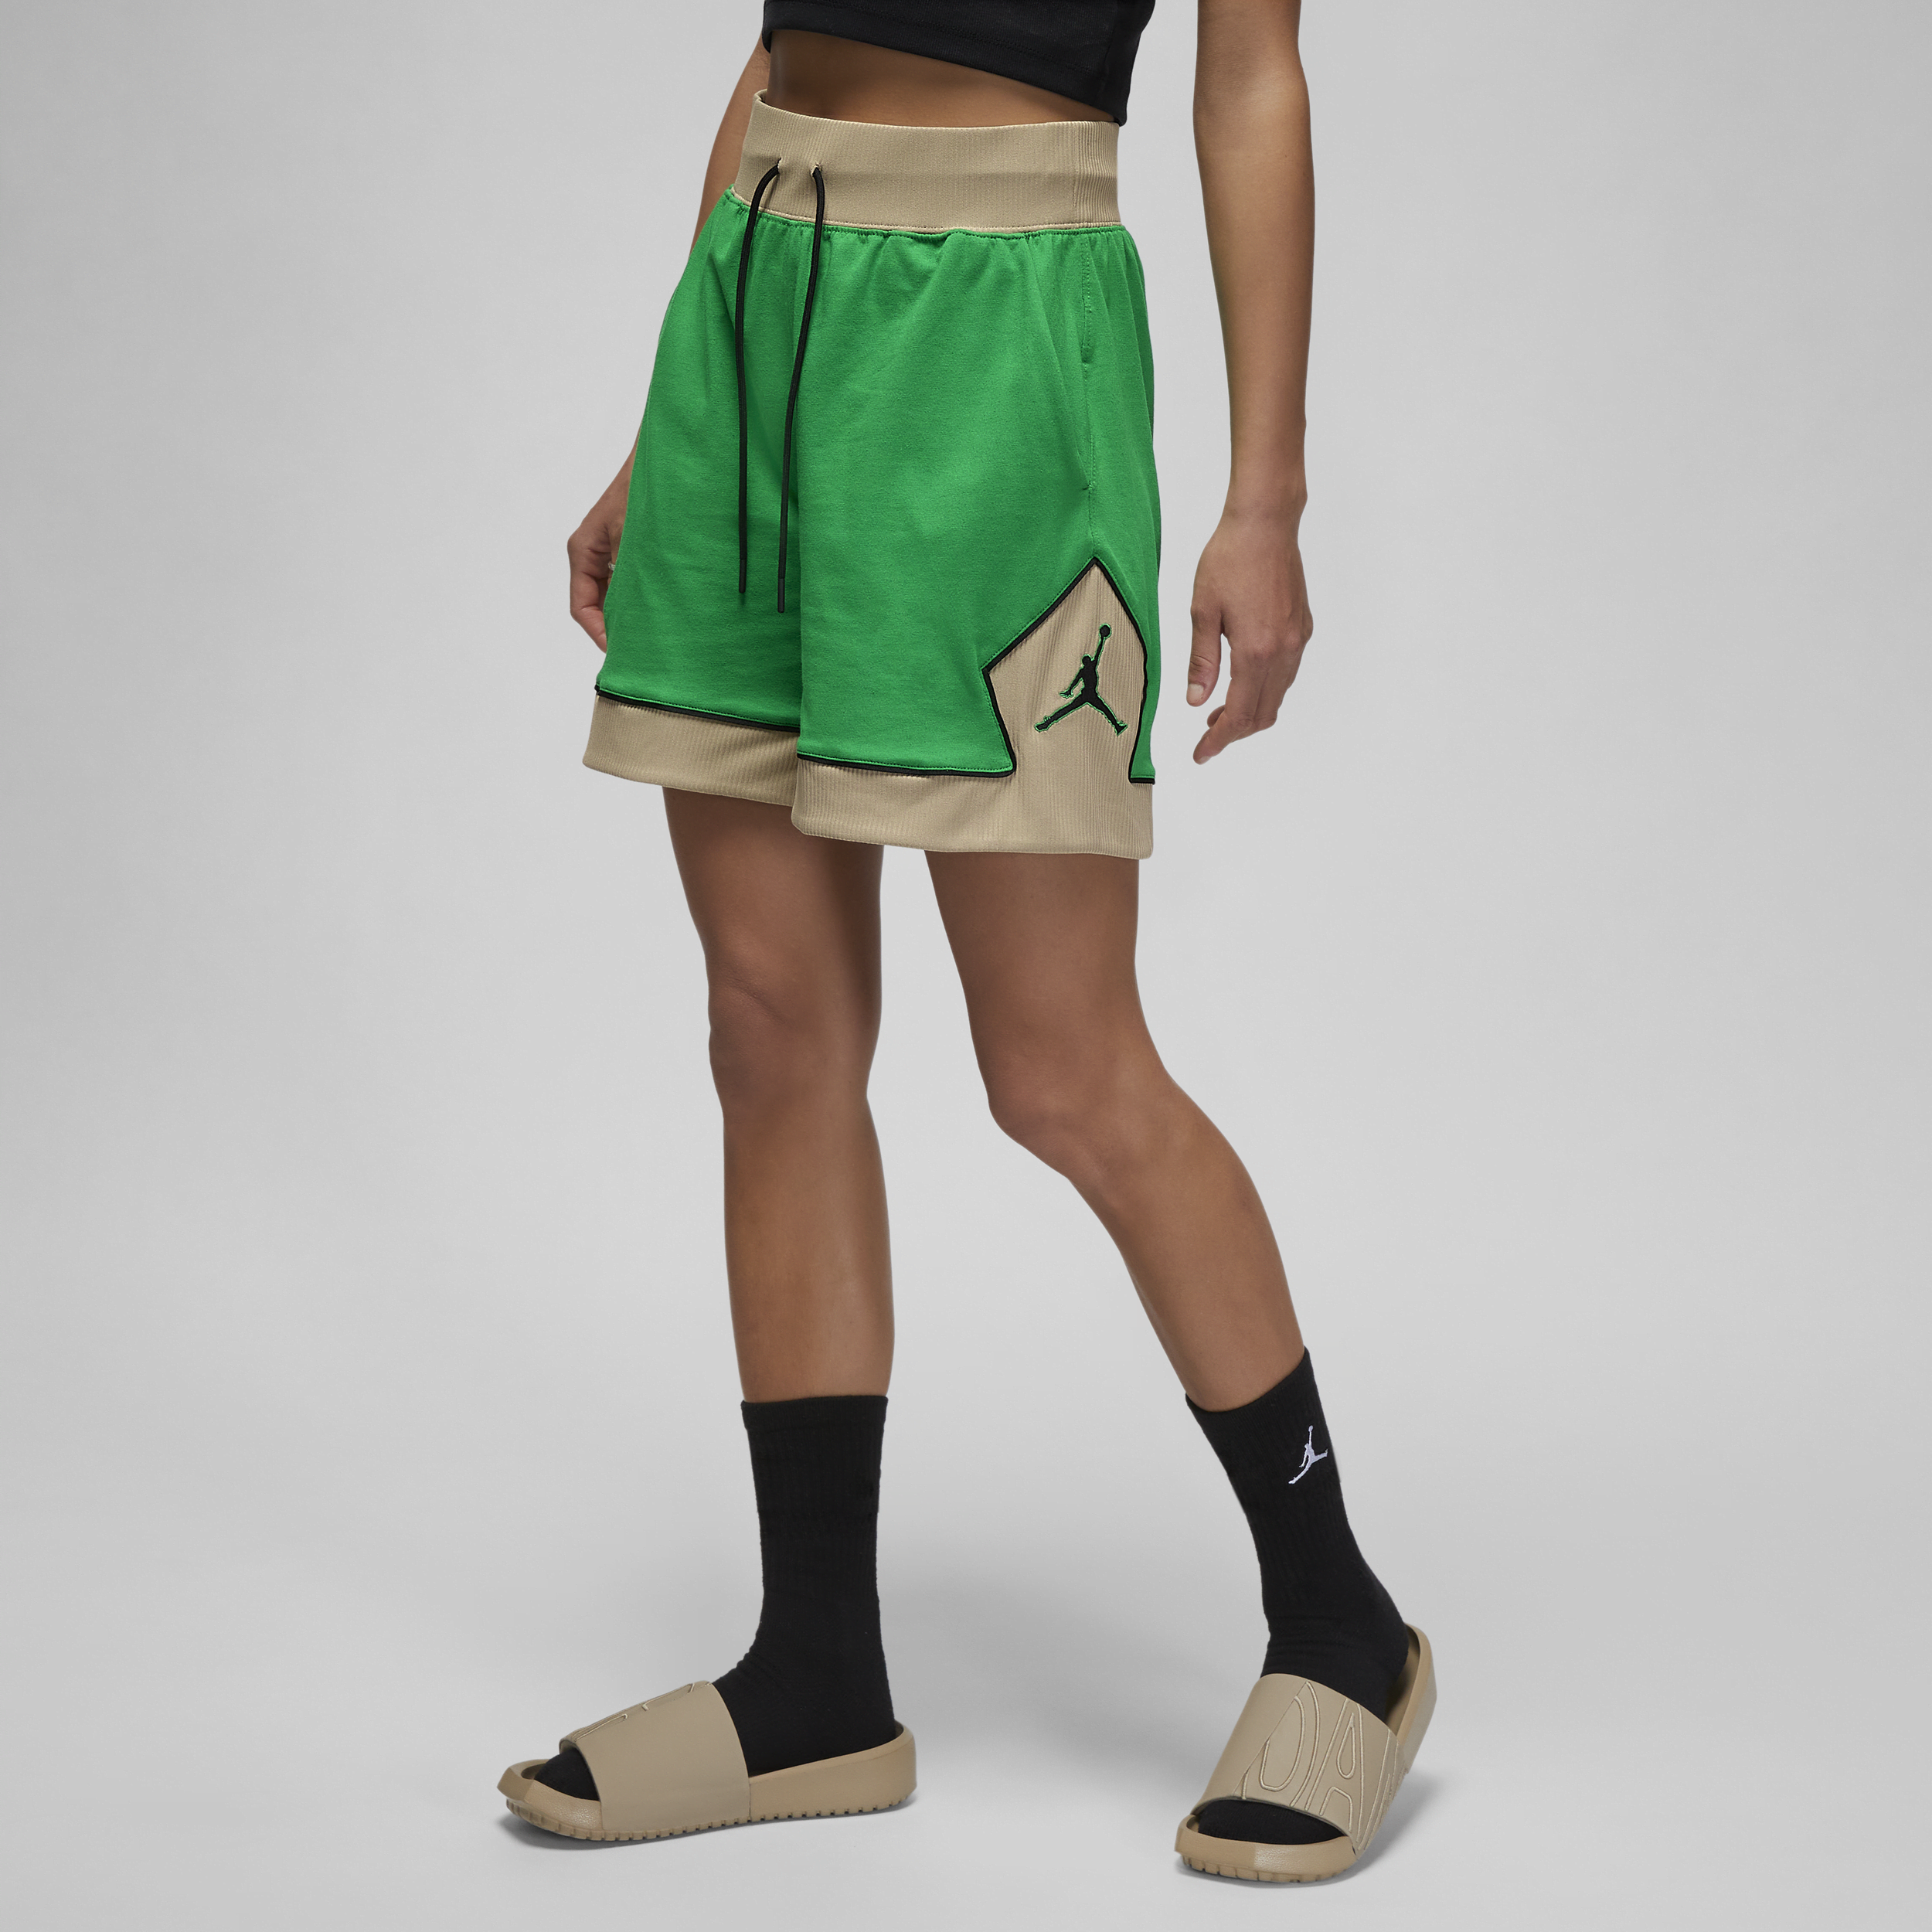 Jordan-diamond-shorts til kvinder - grøn